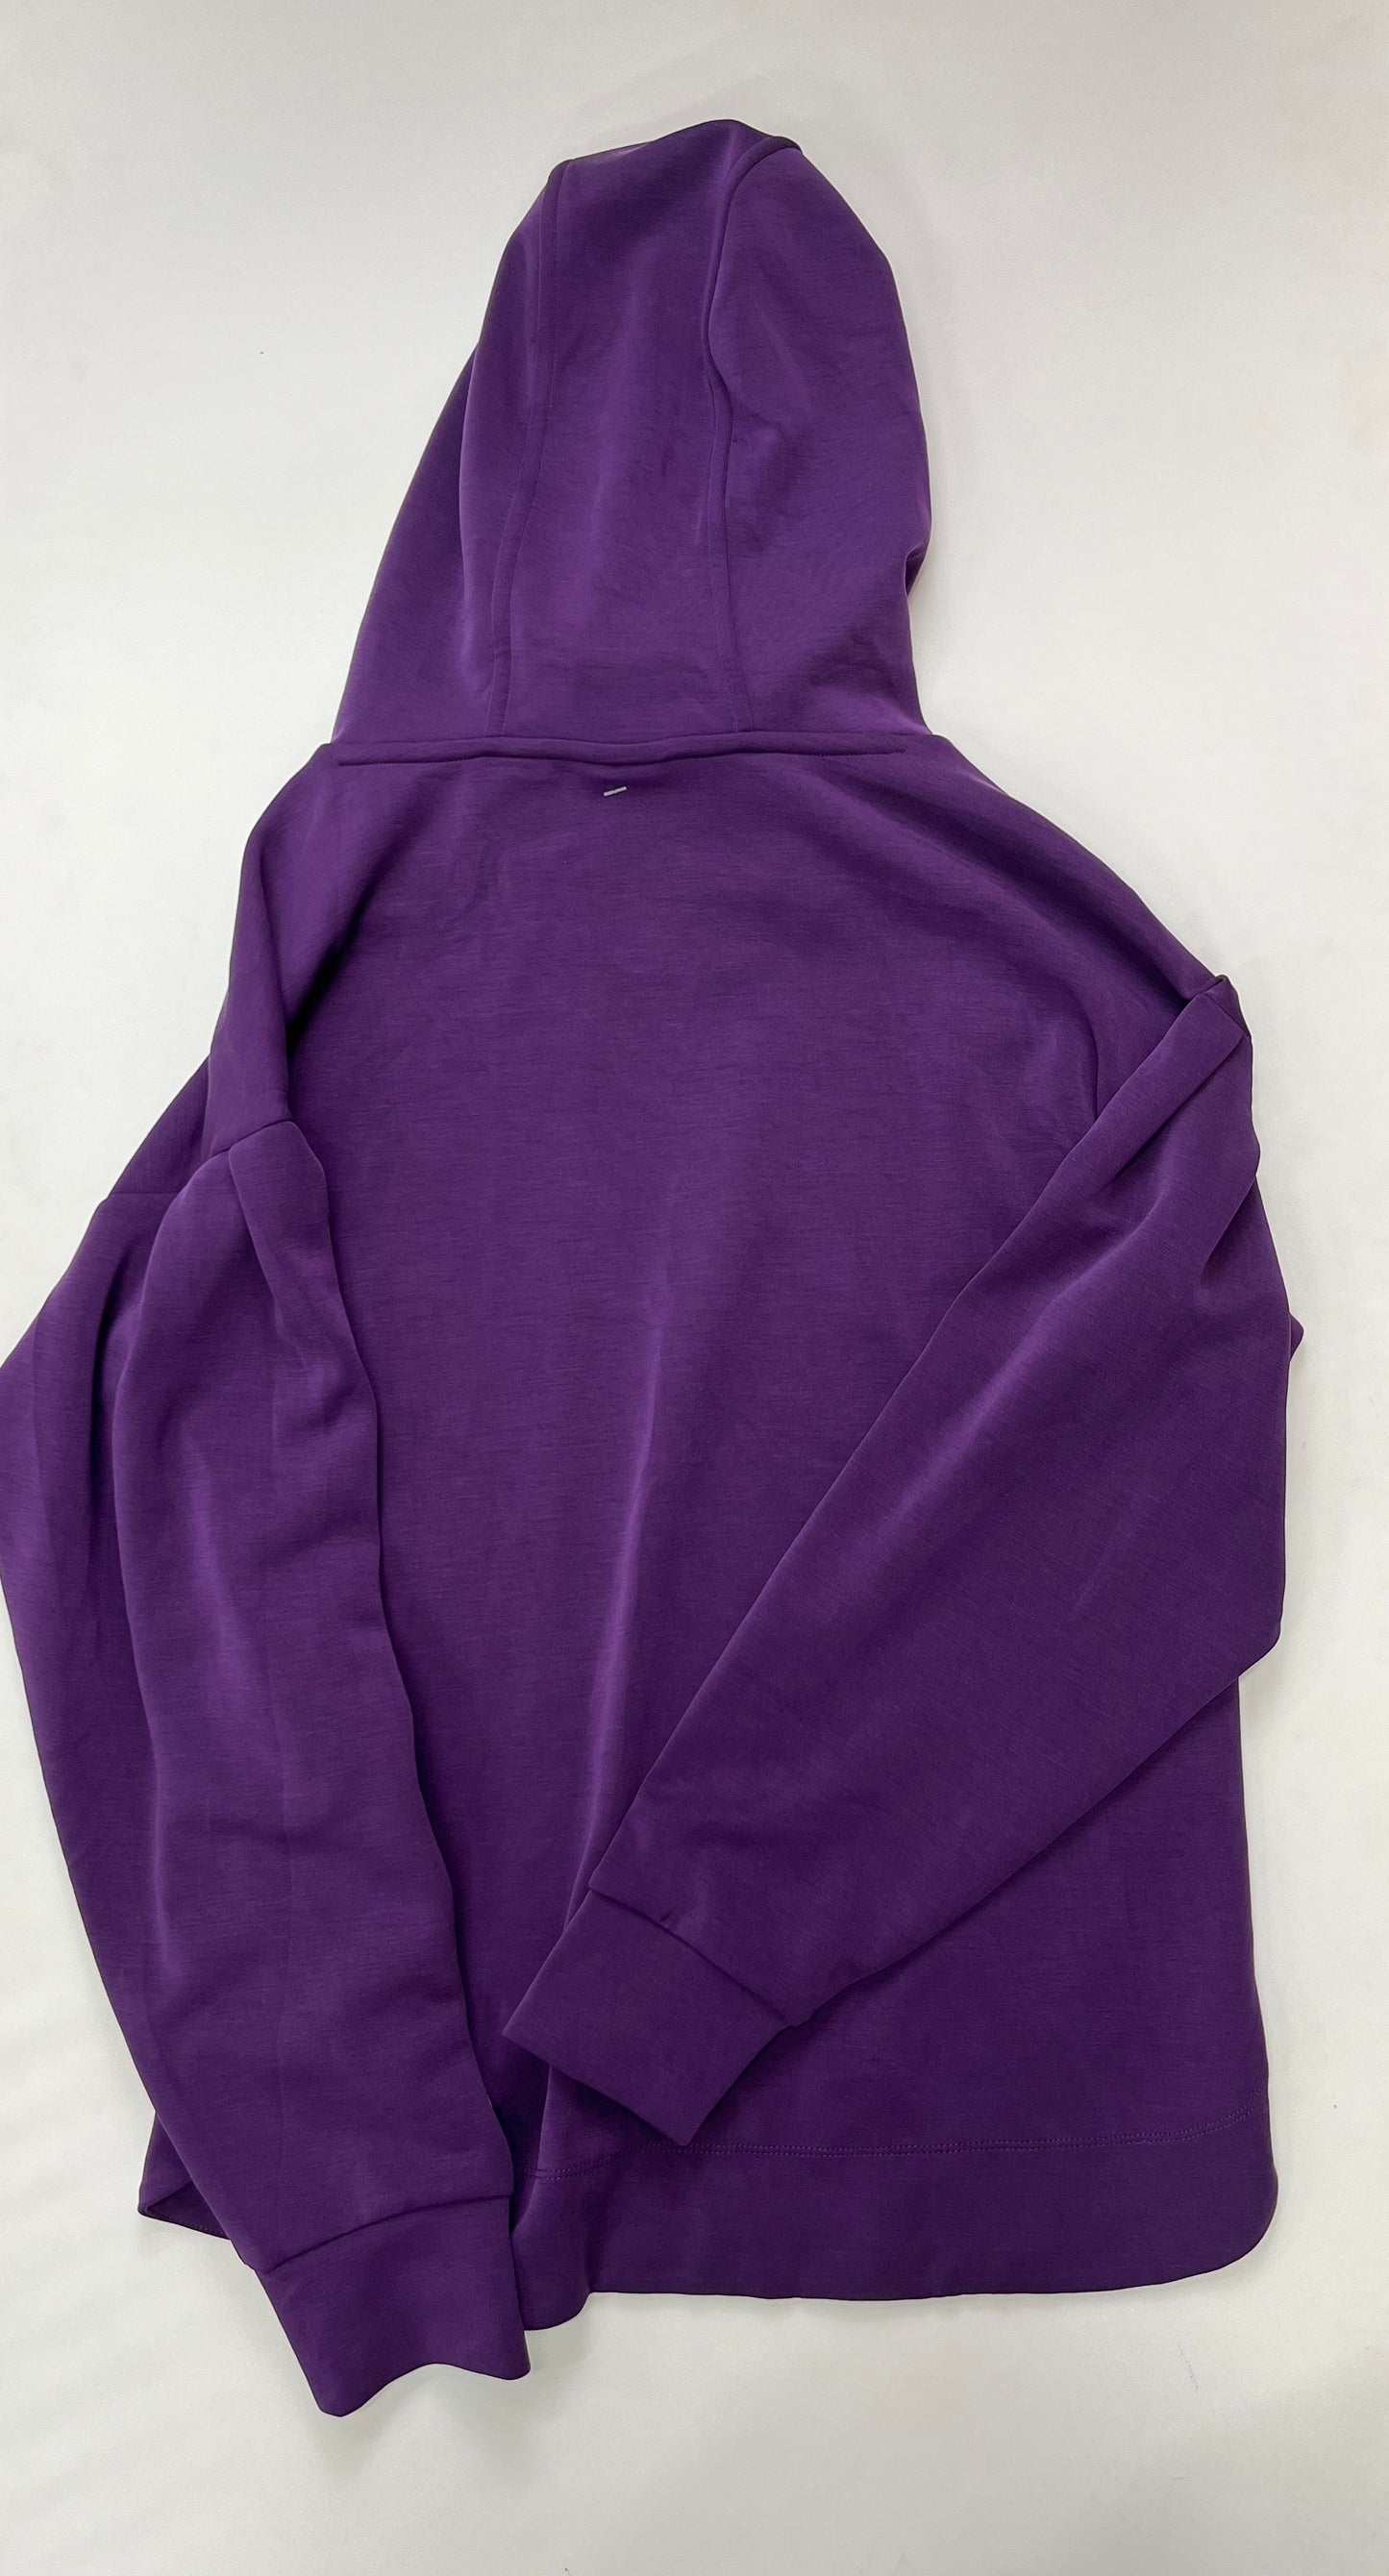 Sweatshirt Hoodie By Calia NWT Size: S